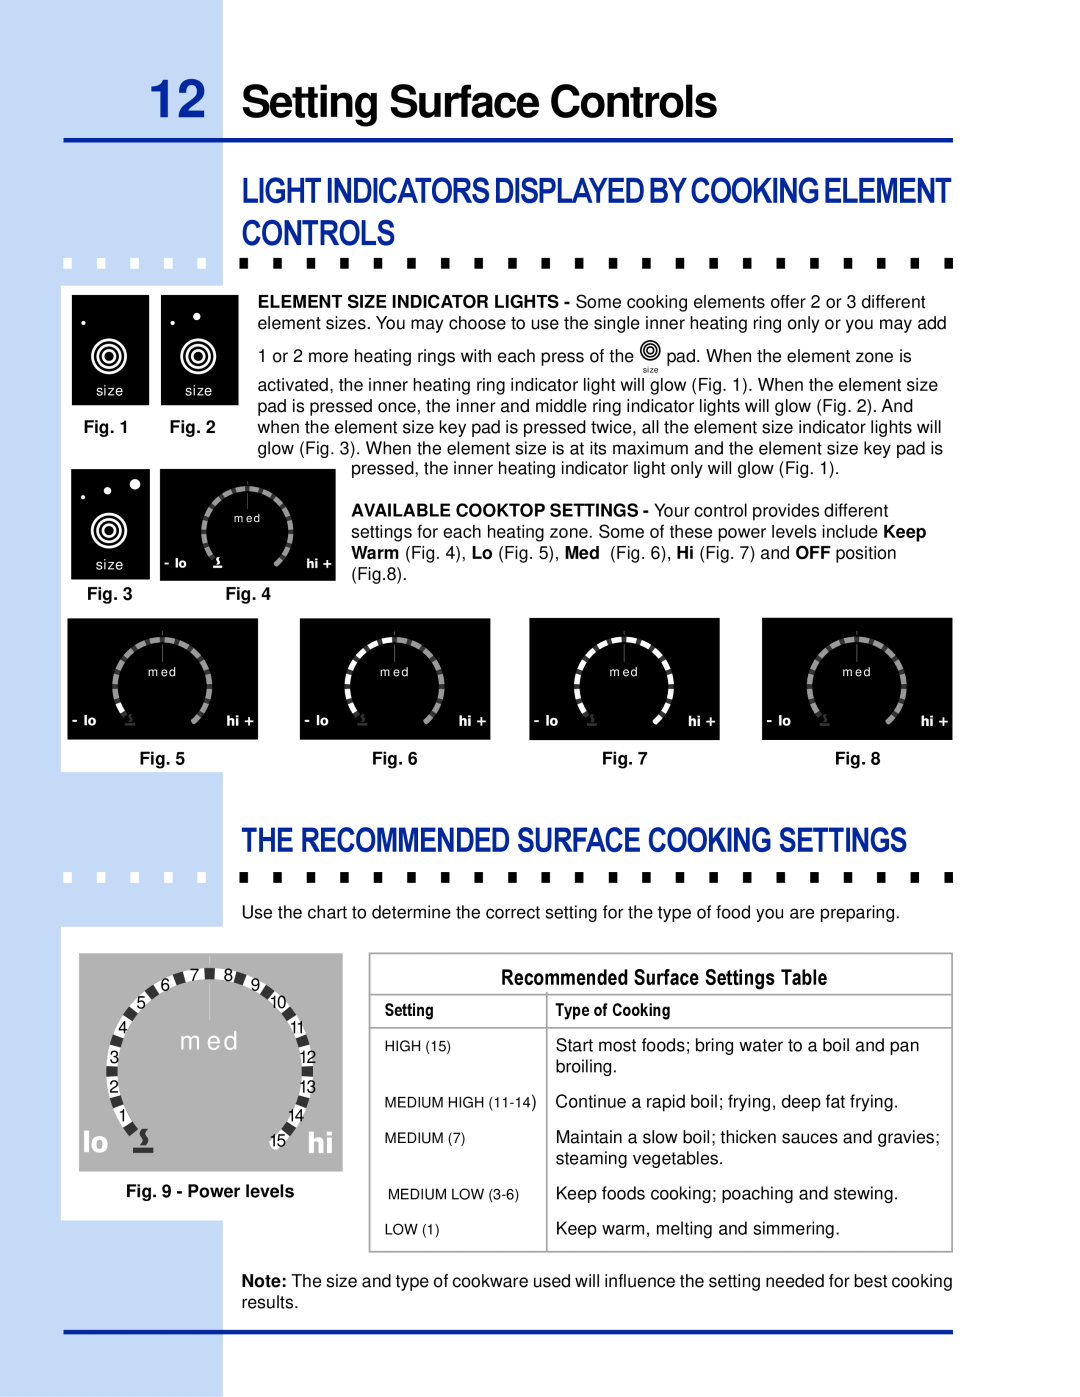 Electrolux 36 manual Setting Surface Controls, Lightindicatorsdisplayedbycookingelement Controls 